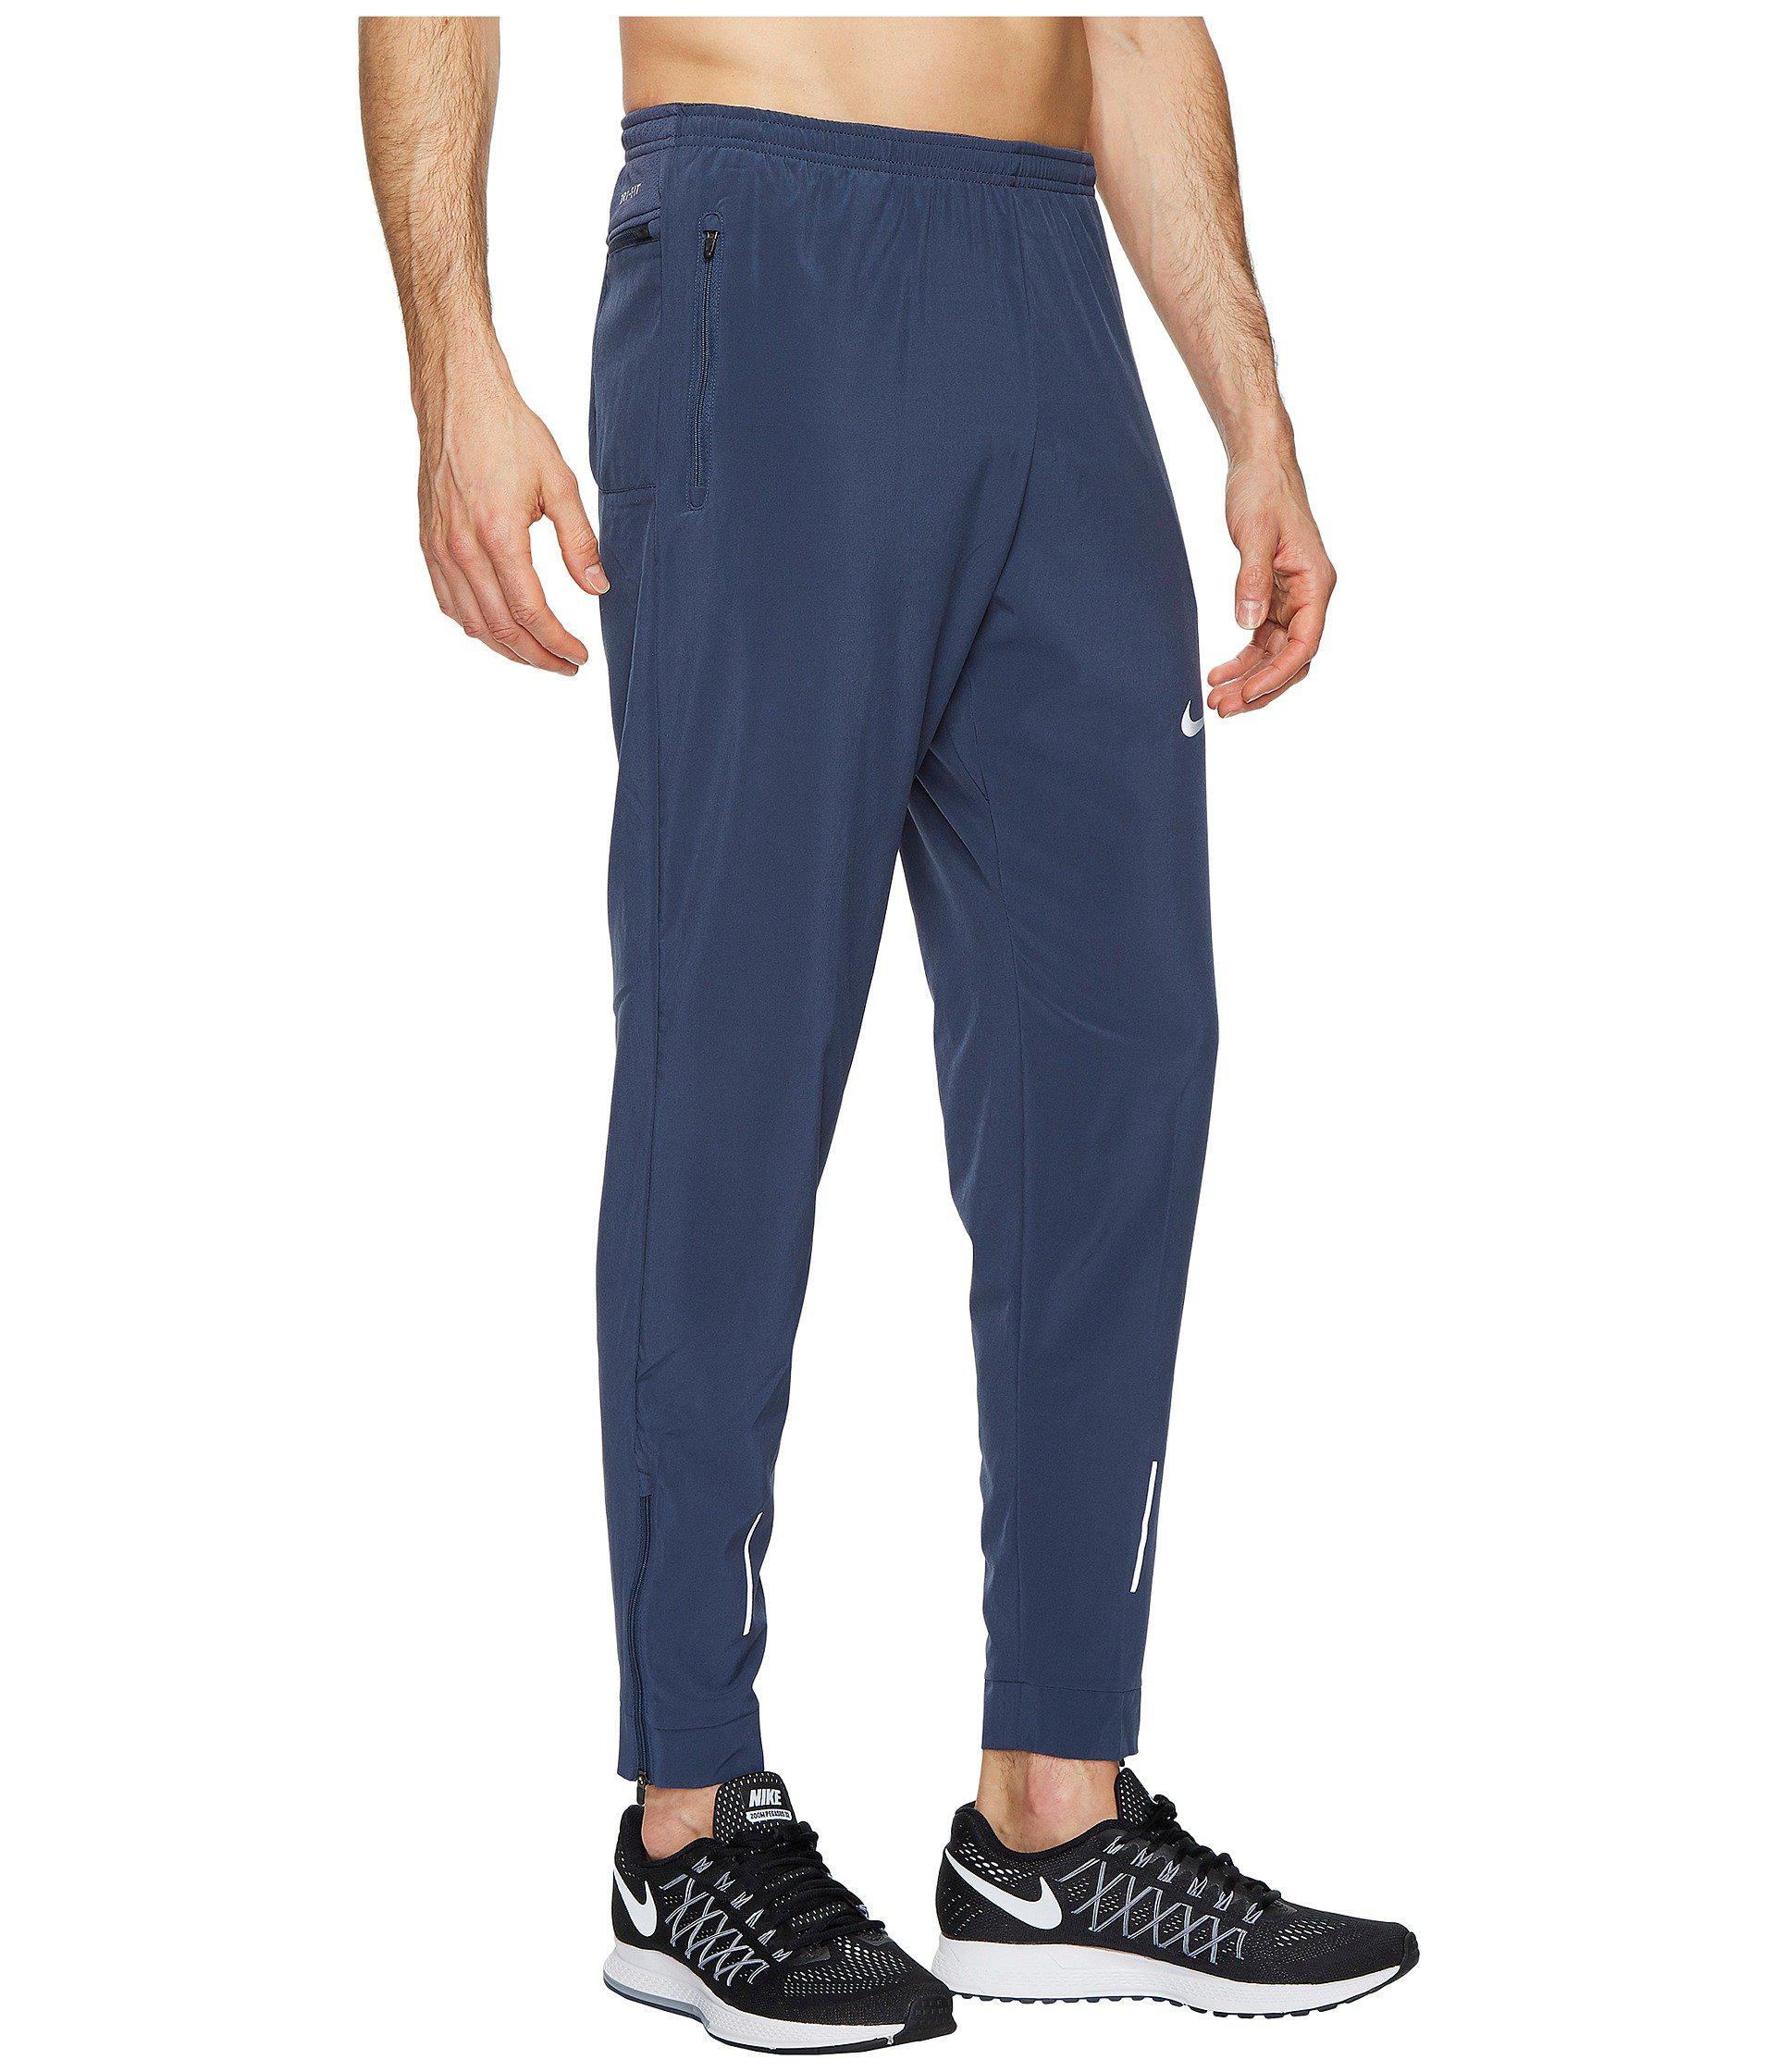 Nike Flex Essential Running Pant in Blue for Men - Lyst